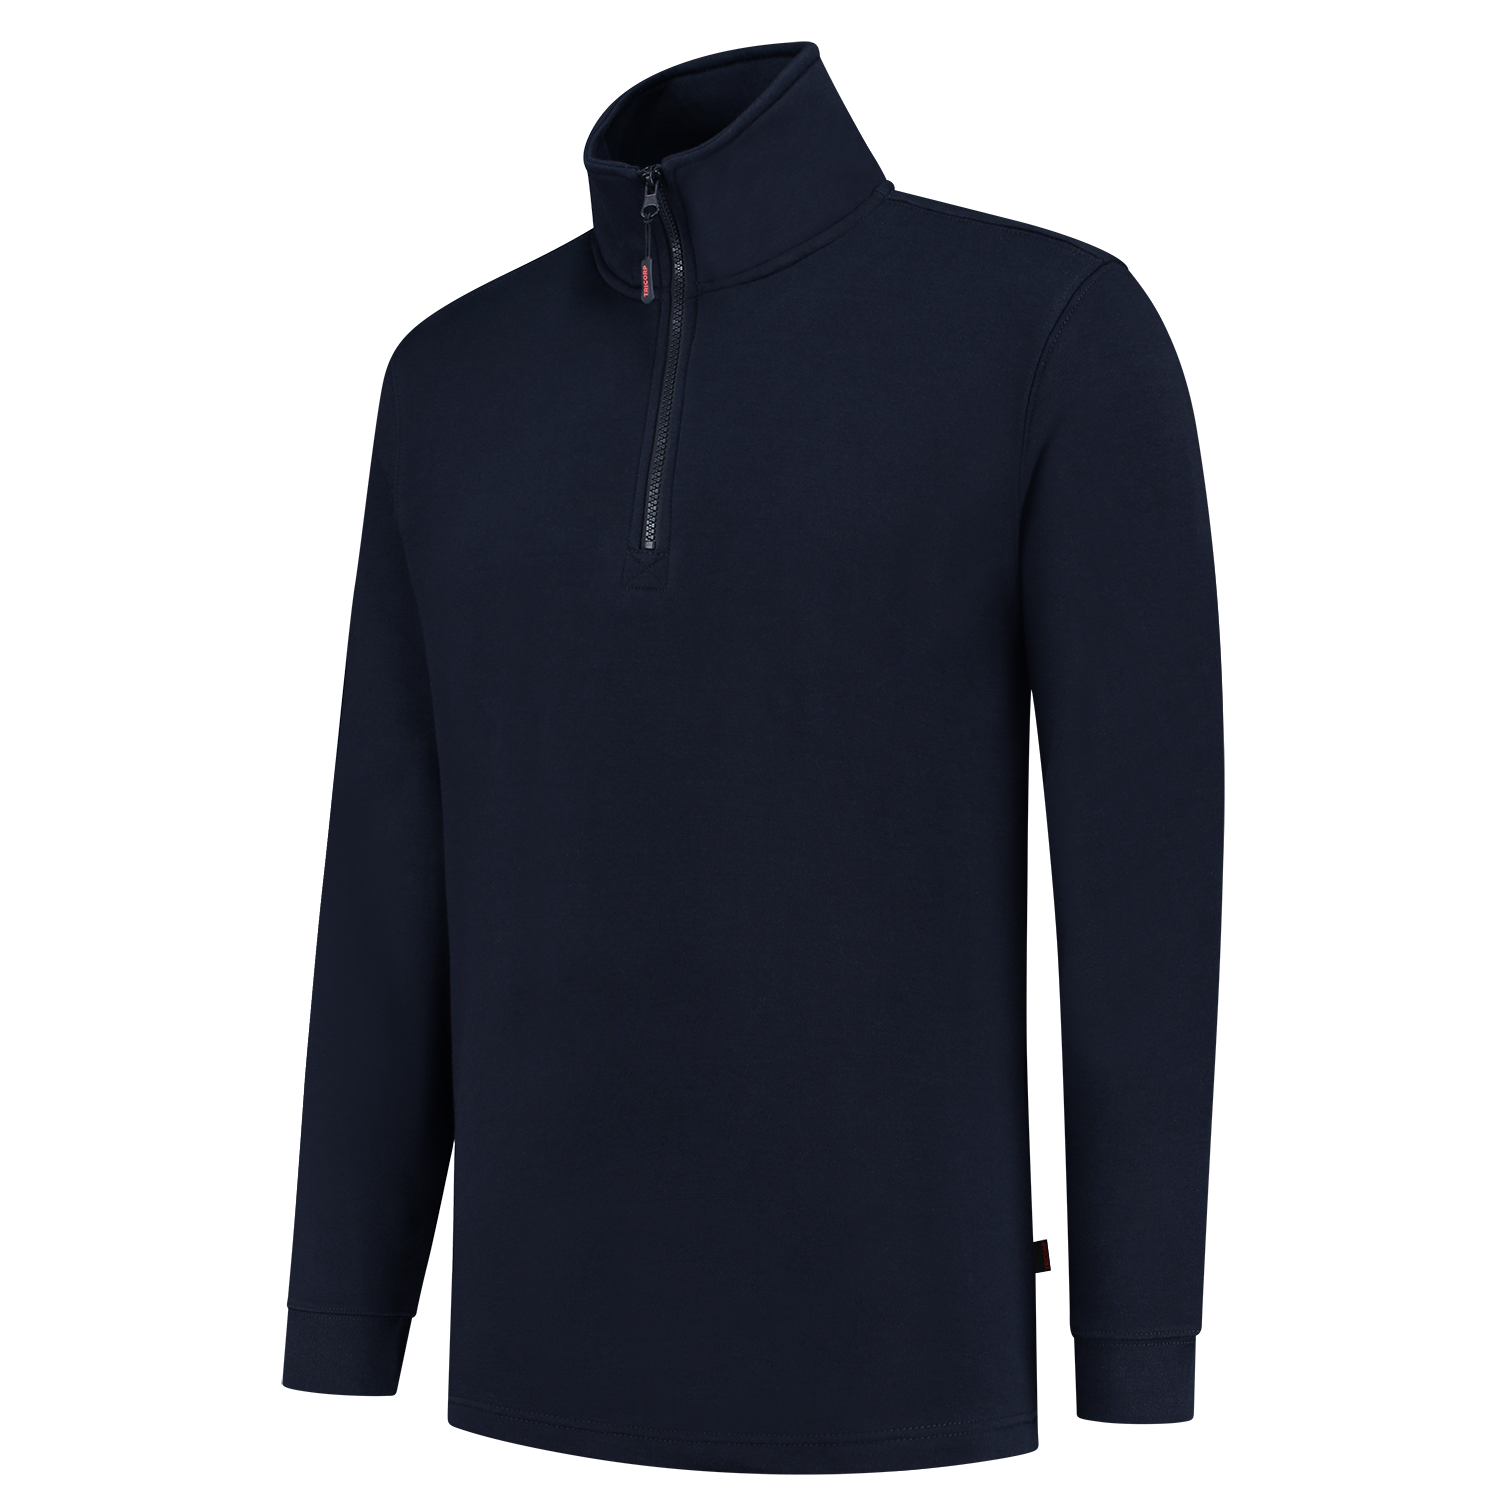 Sweater Ritskraag 301010